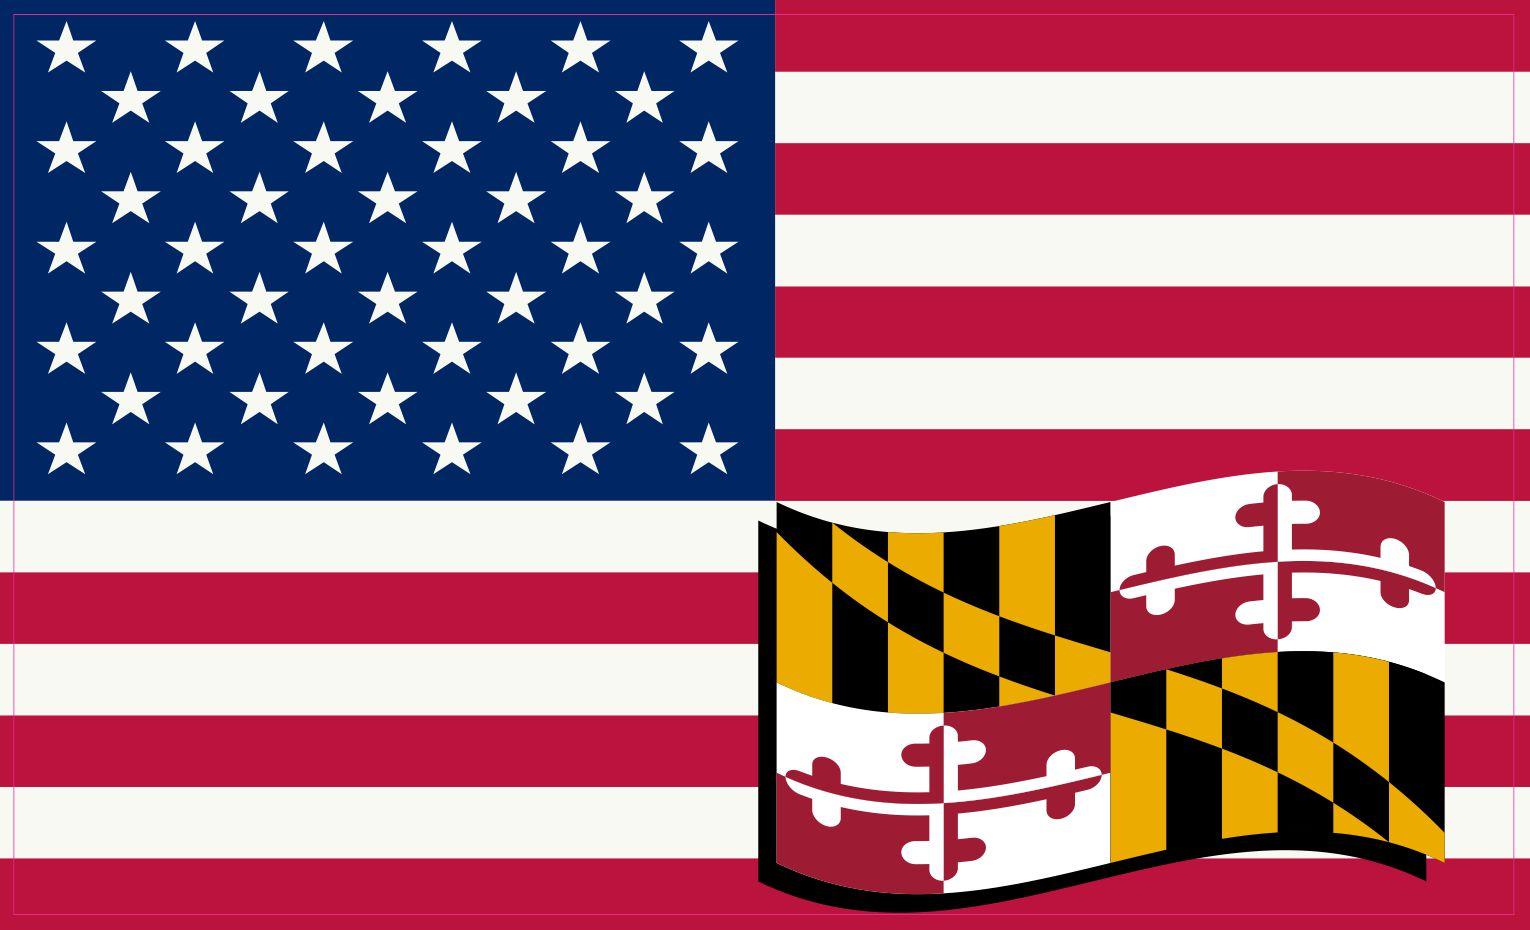 Ear Savers - Maryland Flag – Plak That